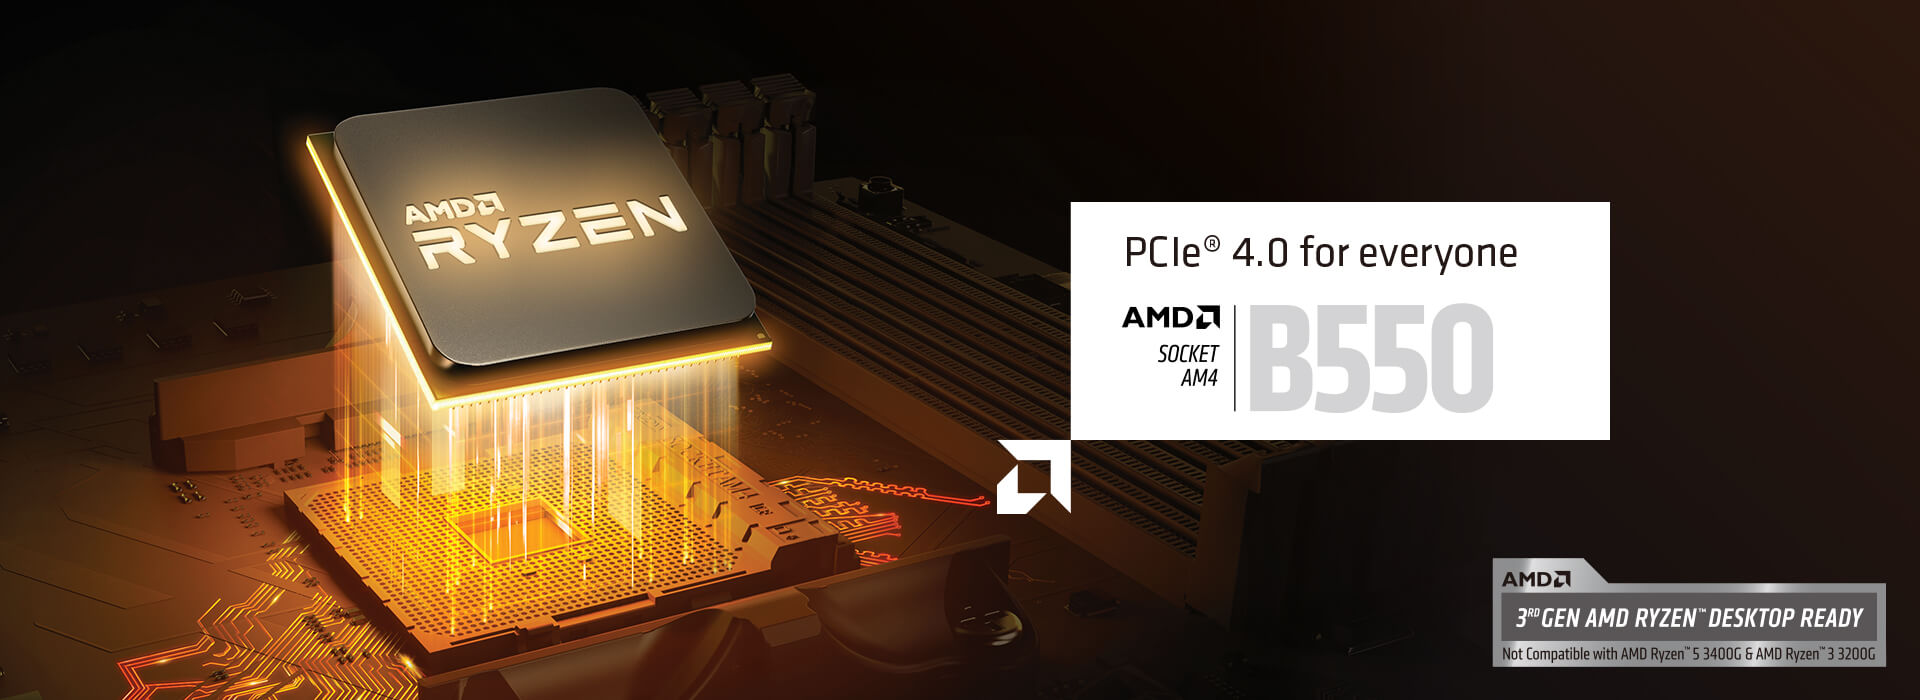 PCIe 4.0 適用於每位使用者。AMD SOCKET AM$ B550。支援第 3 代 AMD RYZEN 桌上型處理器。與 AMD Ryzen 5 3400G 及 AMD Ryzen 3 3200G 不相容。